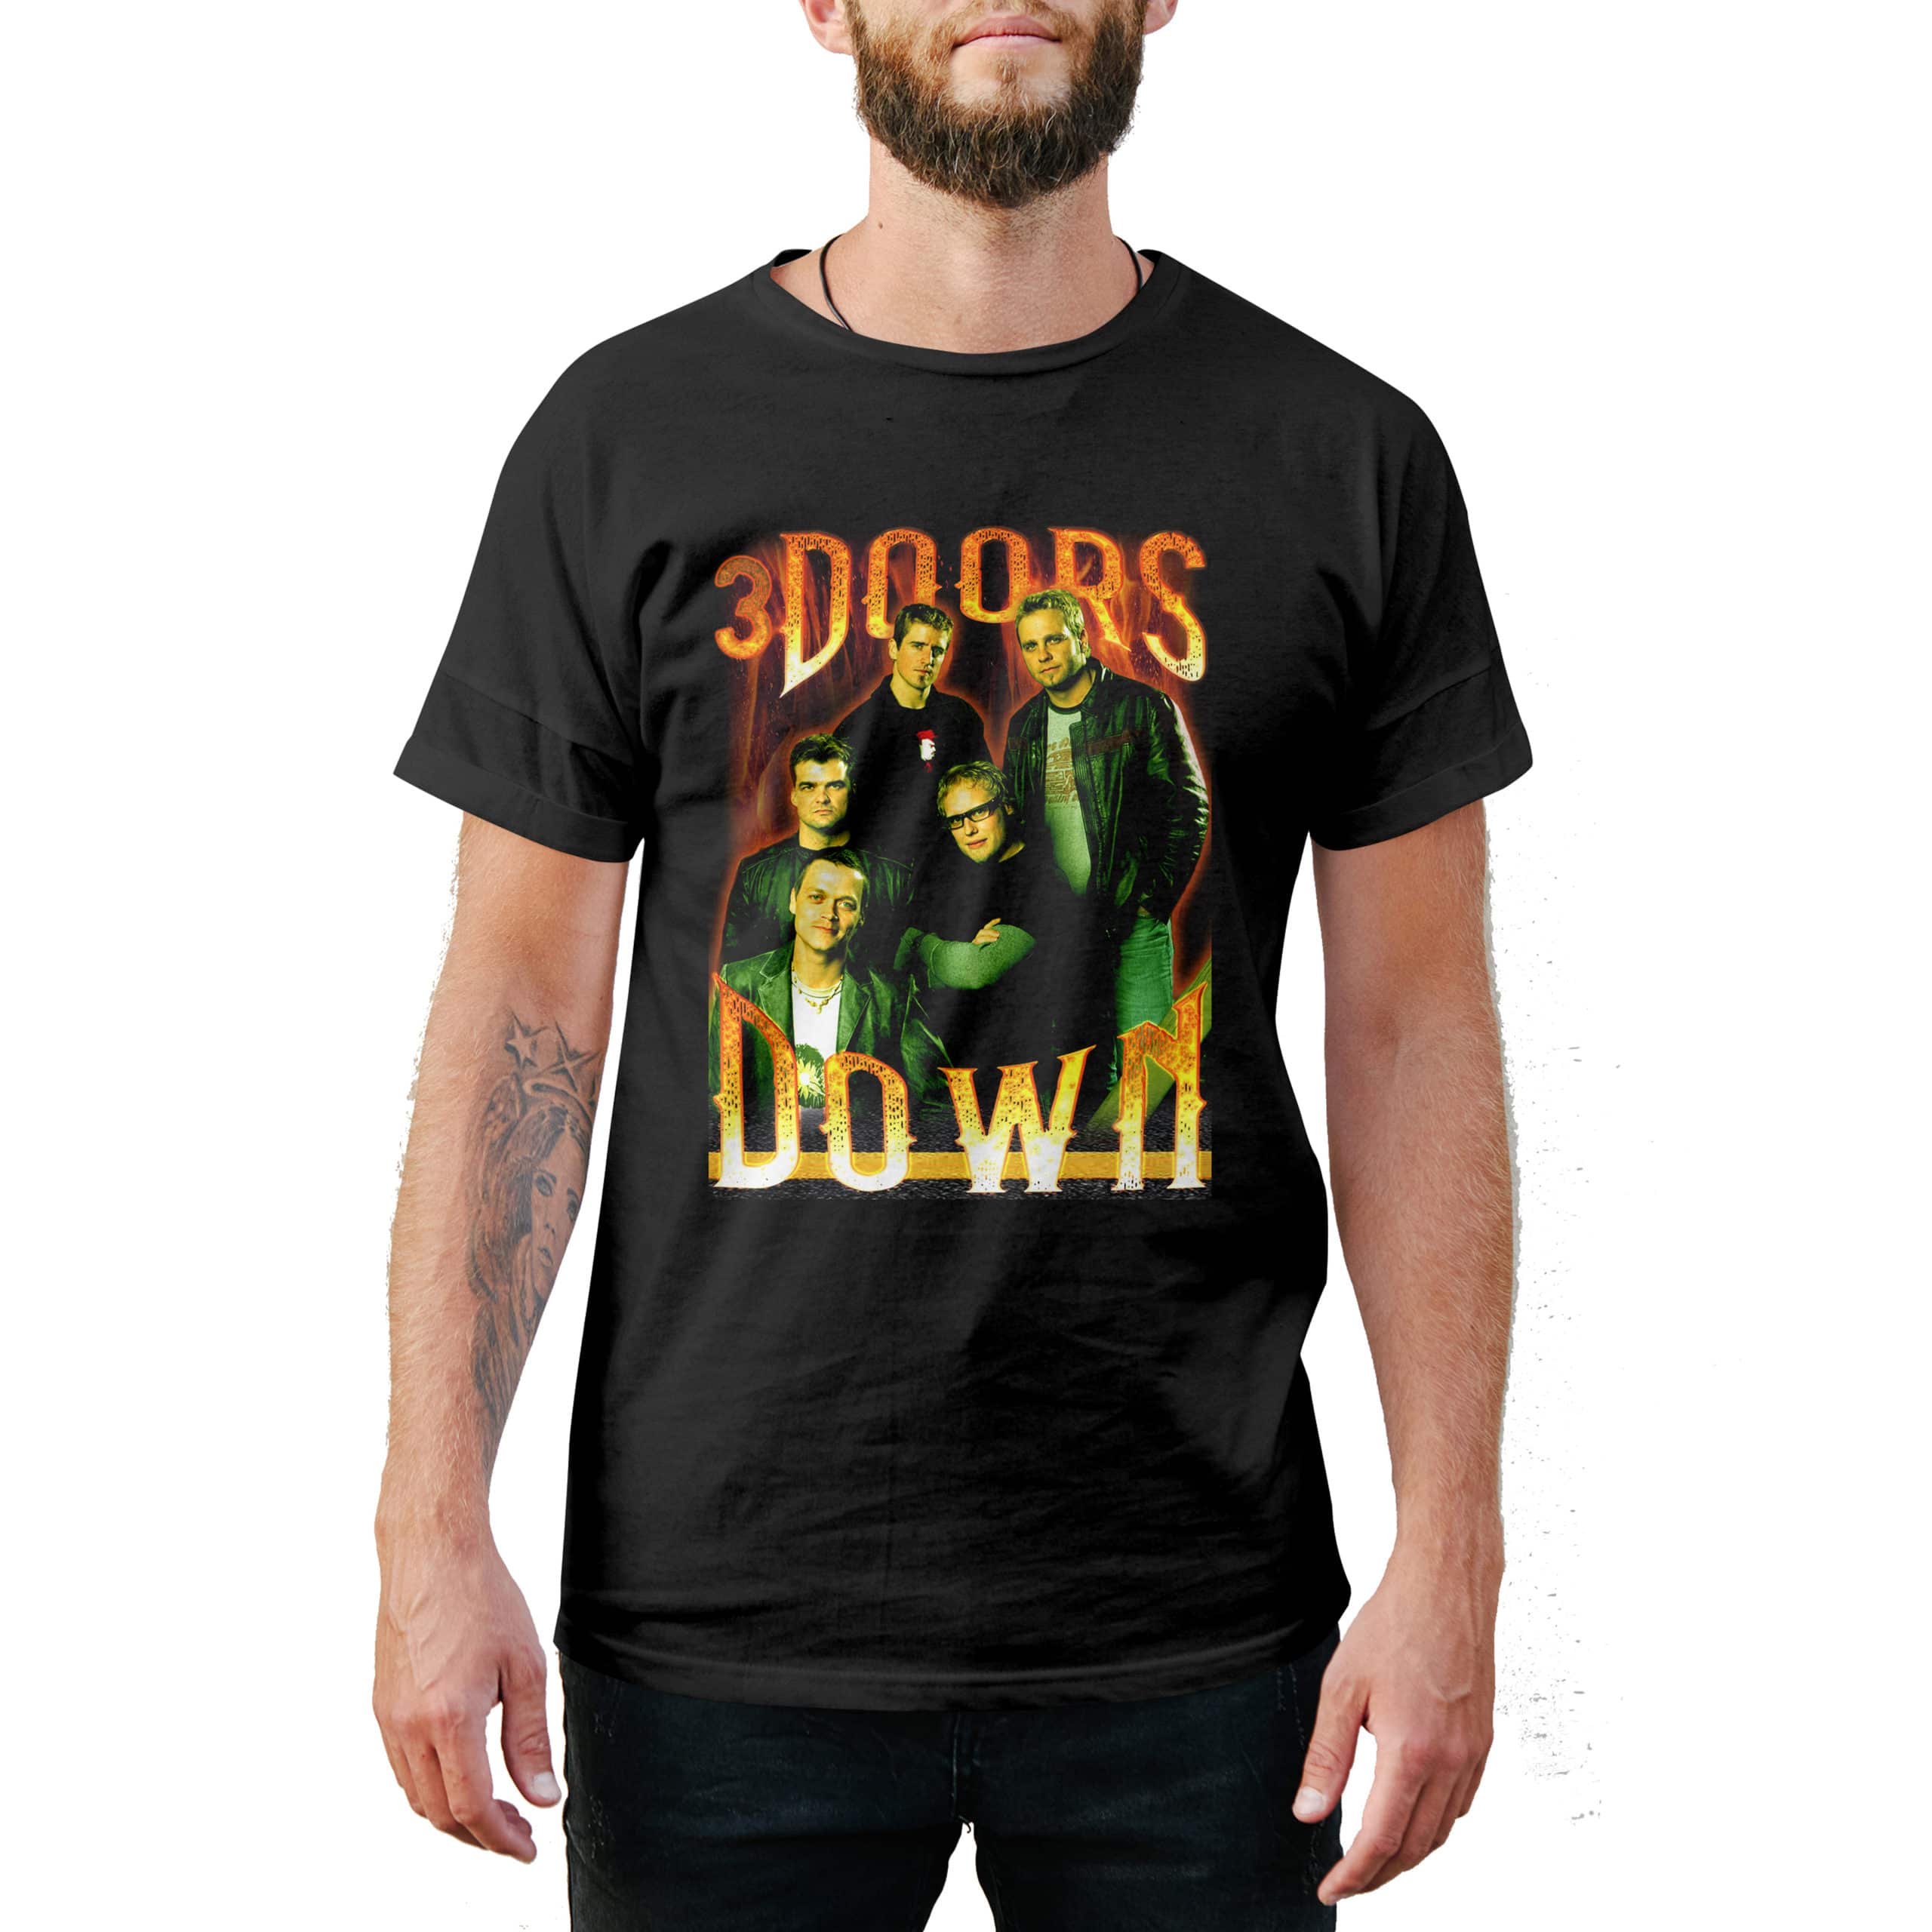 Vintage Style 3 Doors Down T-Shirt Black Large